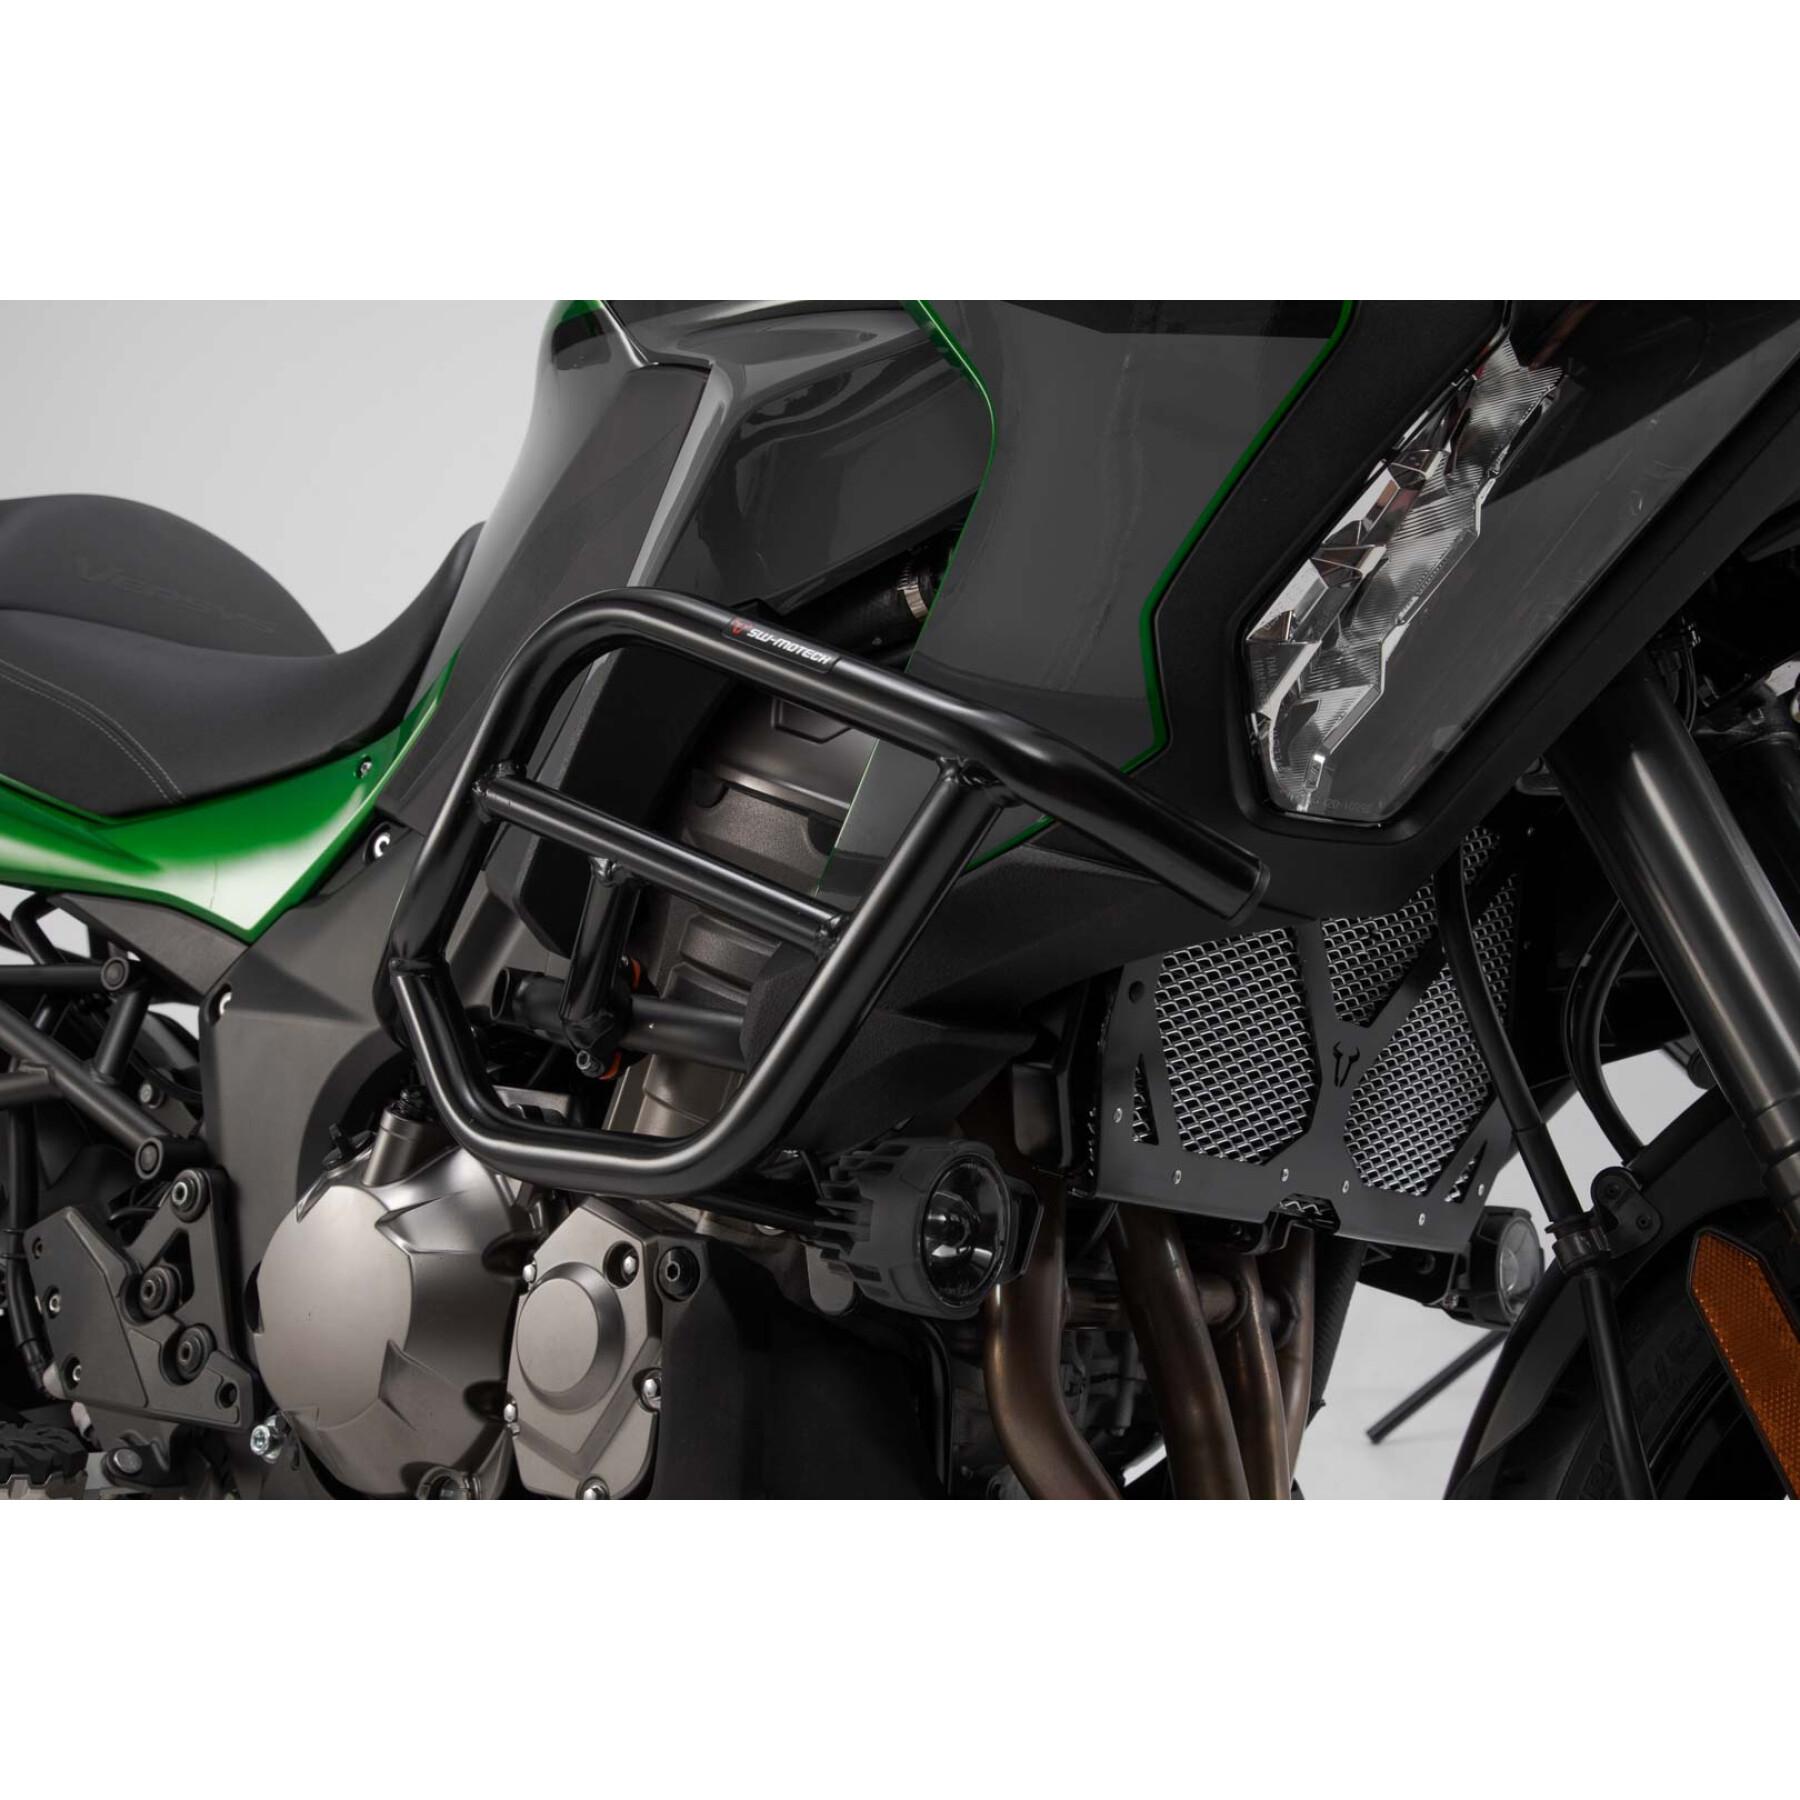 Motorrad-Standartenschutz Sw-Motech Crashbar Kawasaki Versys 1000 (18-)